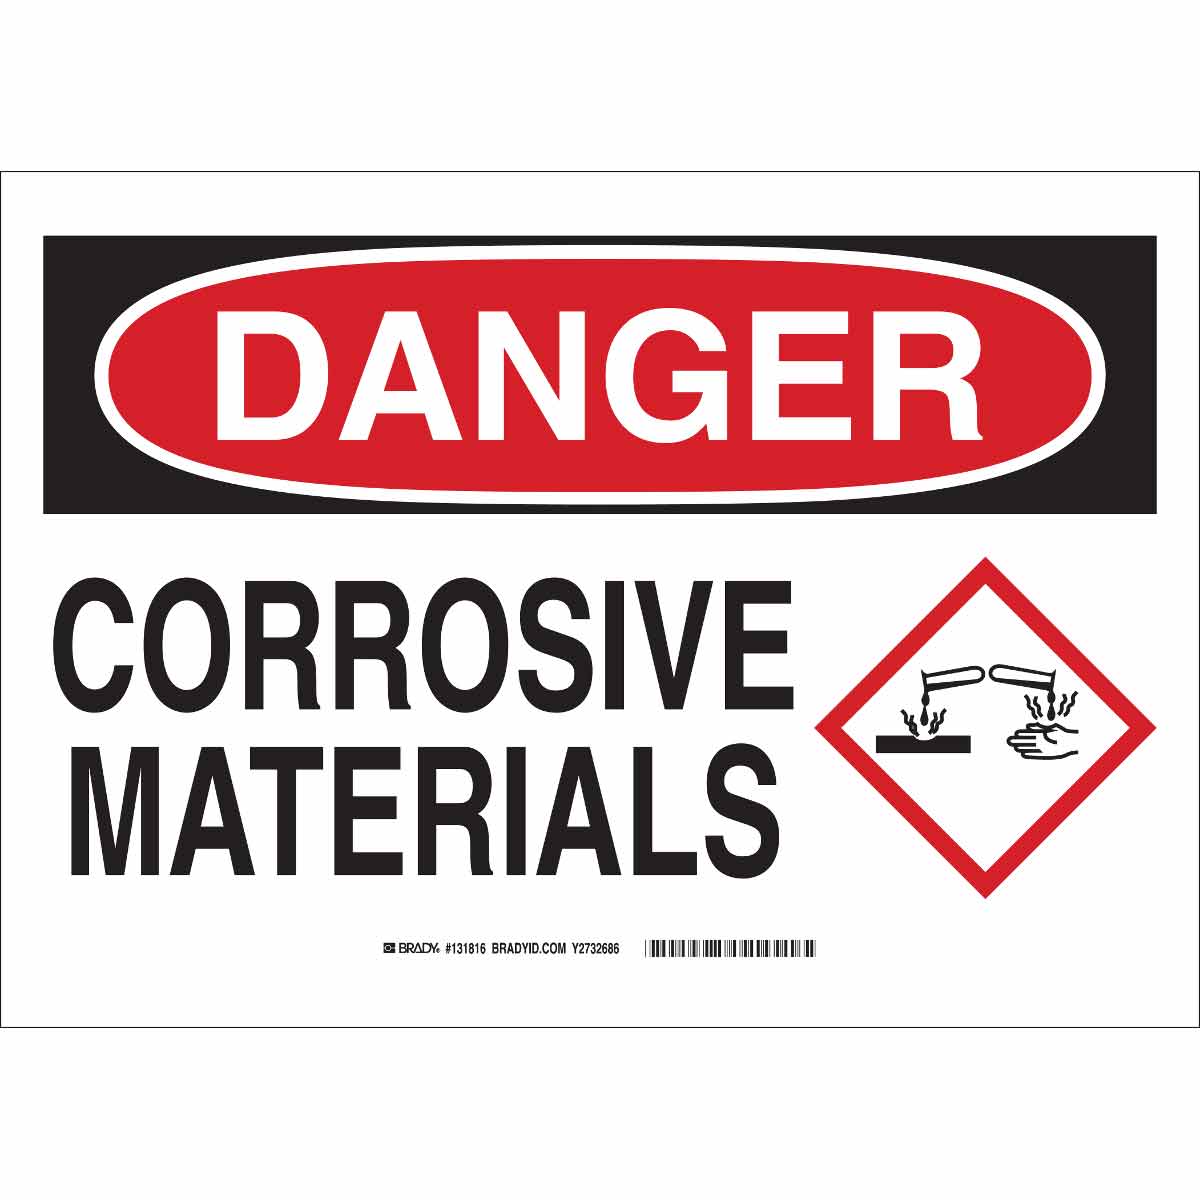 corrosive safety symbol